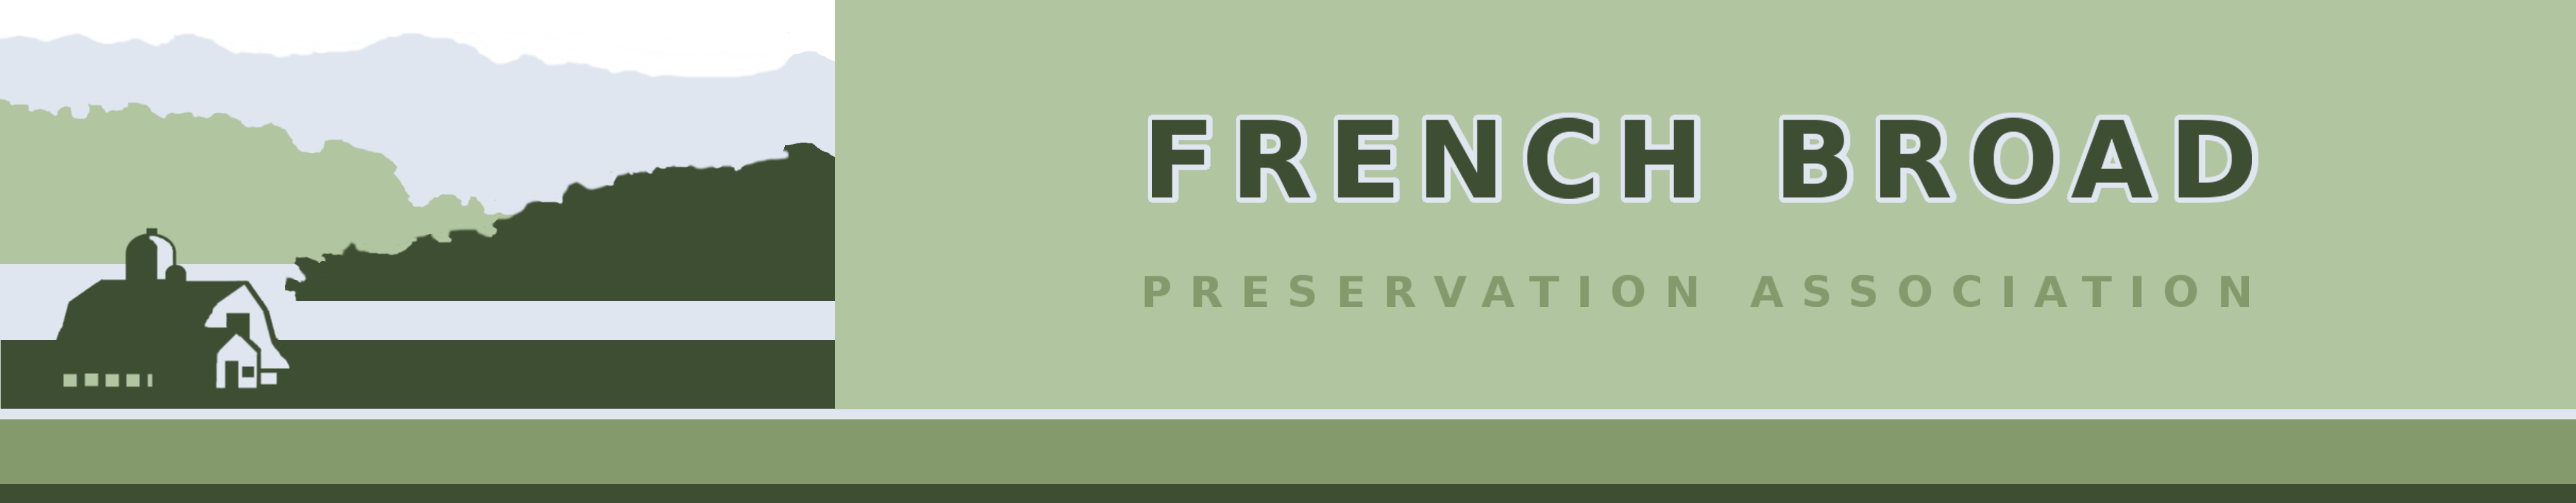 French Broad Preservation Association